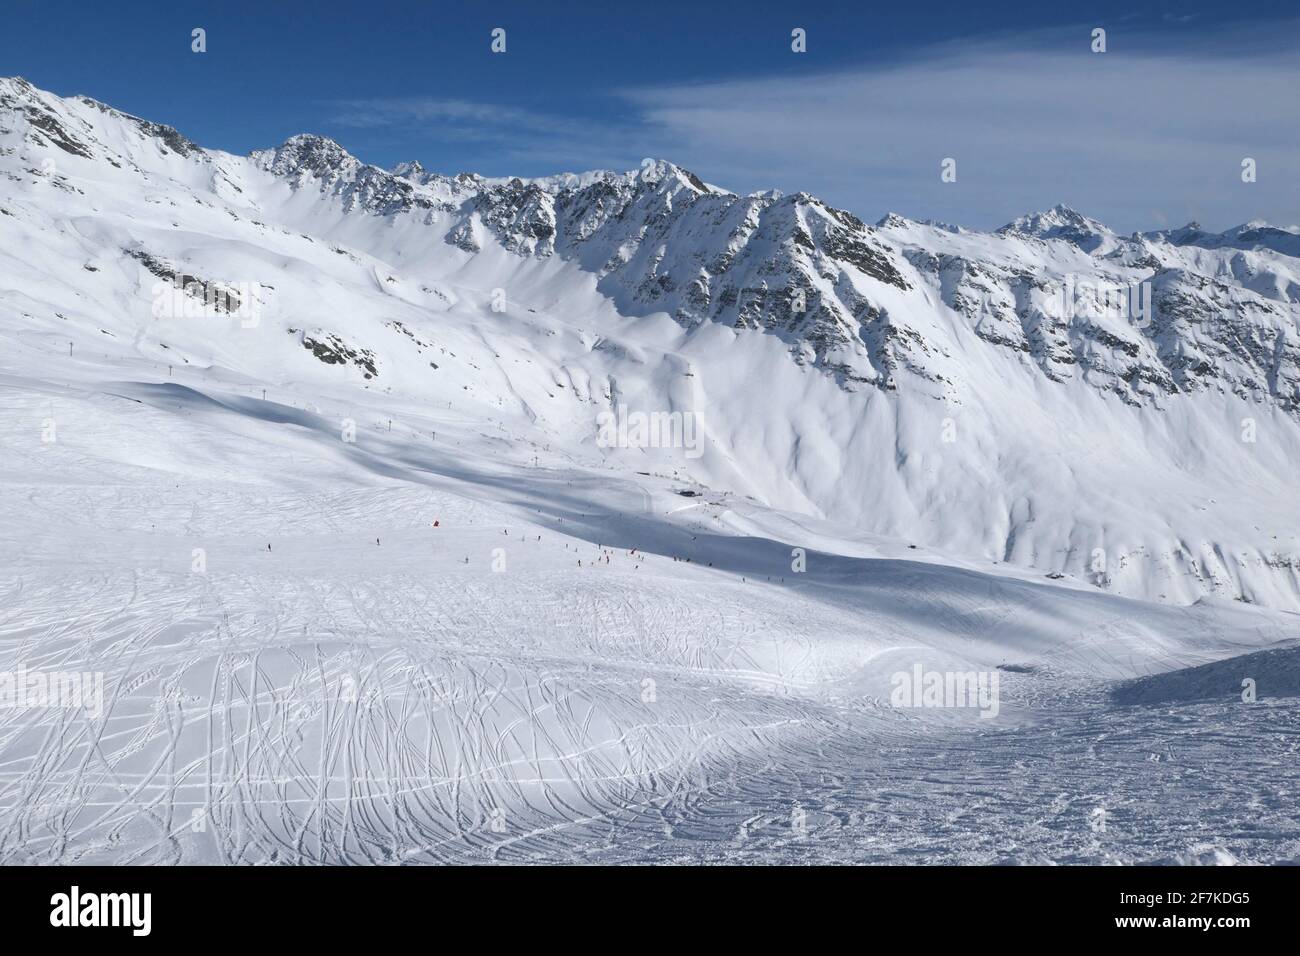 Ski slope in La Rosiere in France. French alps winter mountains landscape. Stock Photo